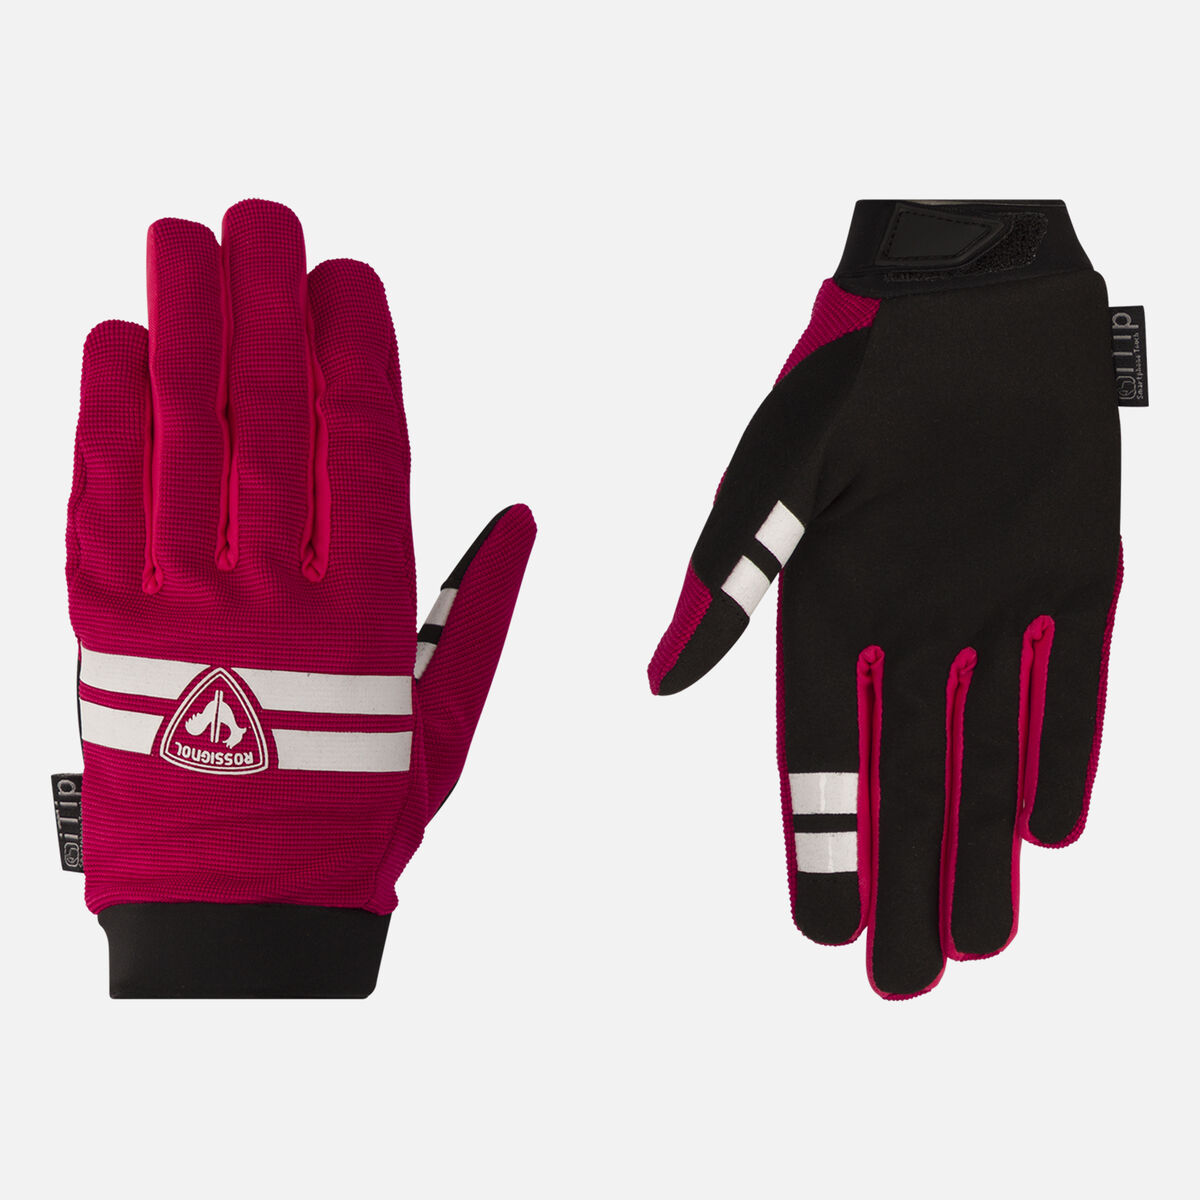 Rossignol Women's full-finger mountain bike gloves Pink/Purple